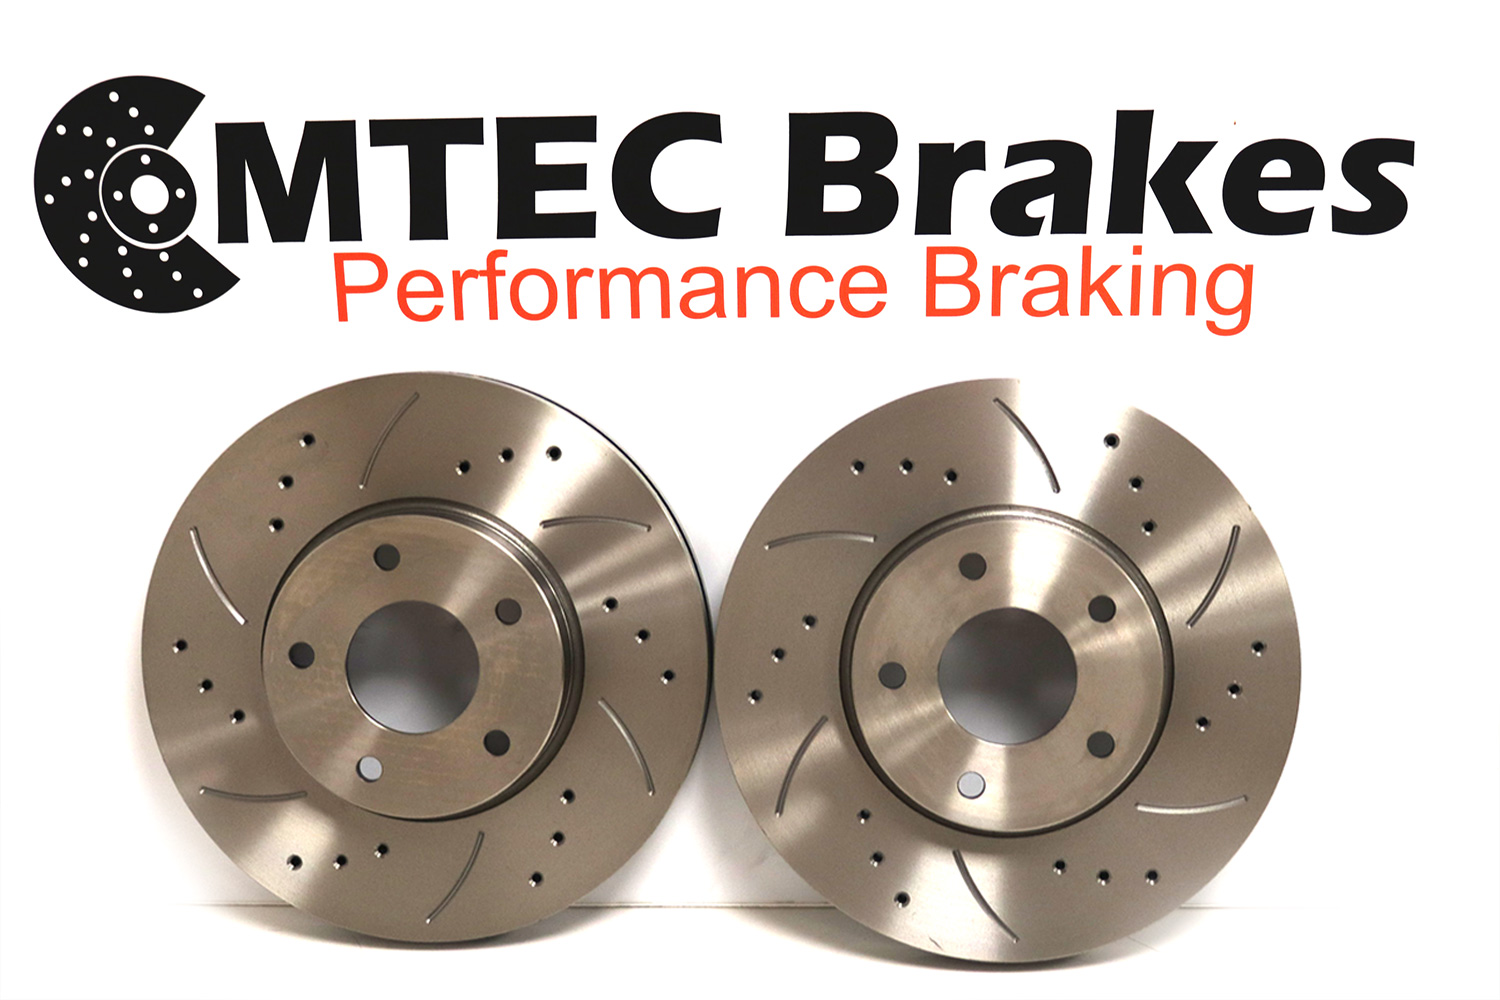 MTEC1033 Performance Brake Discs